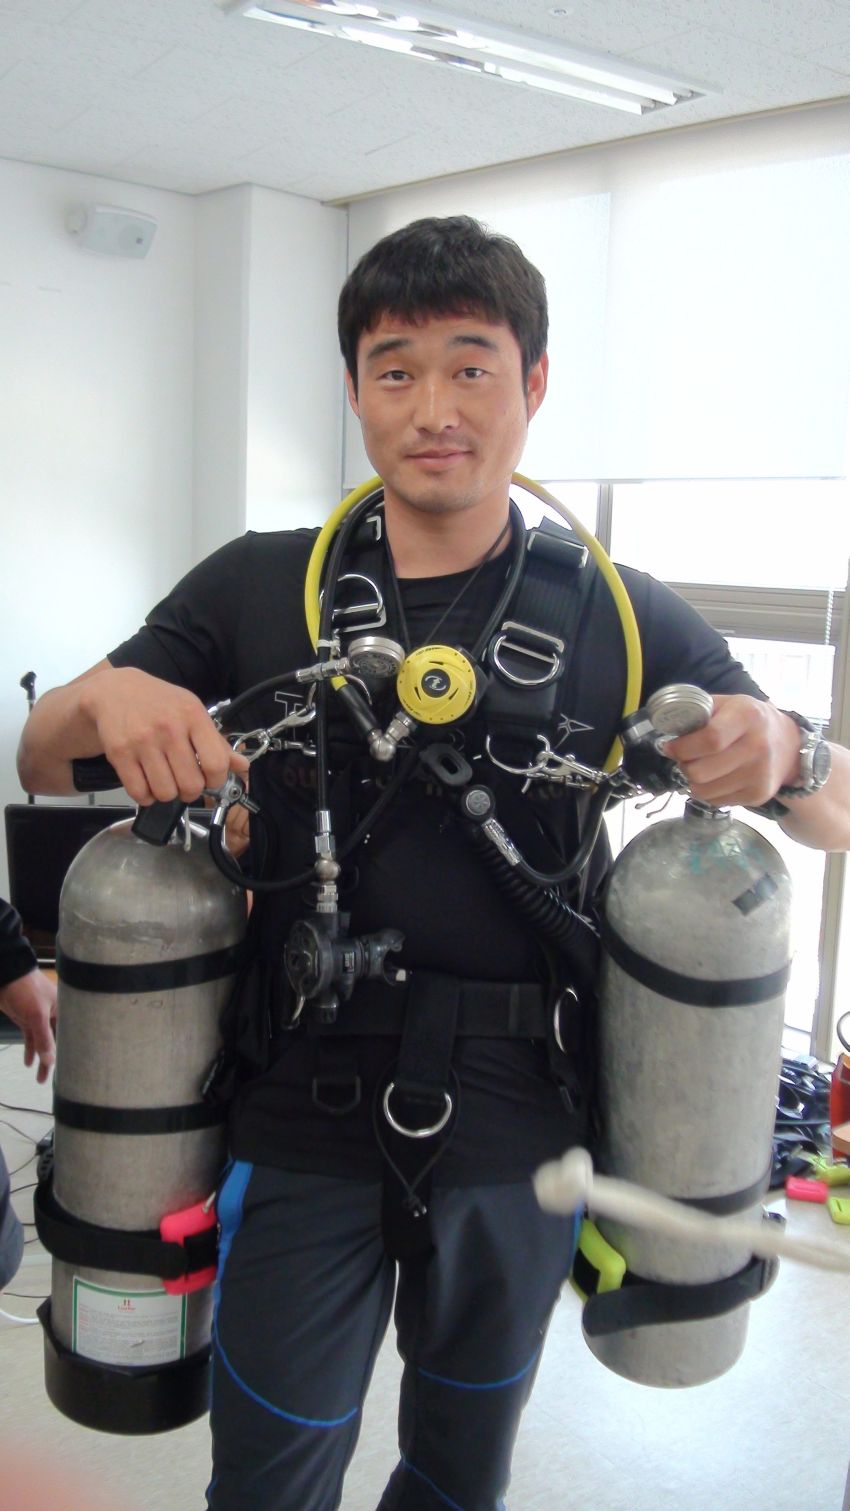 korea coast guard sea special rescue team